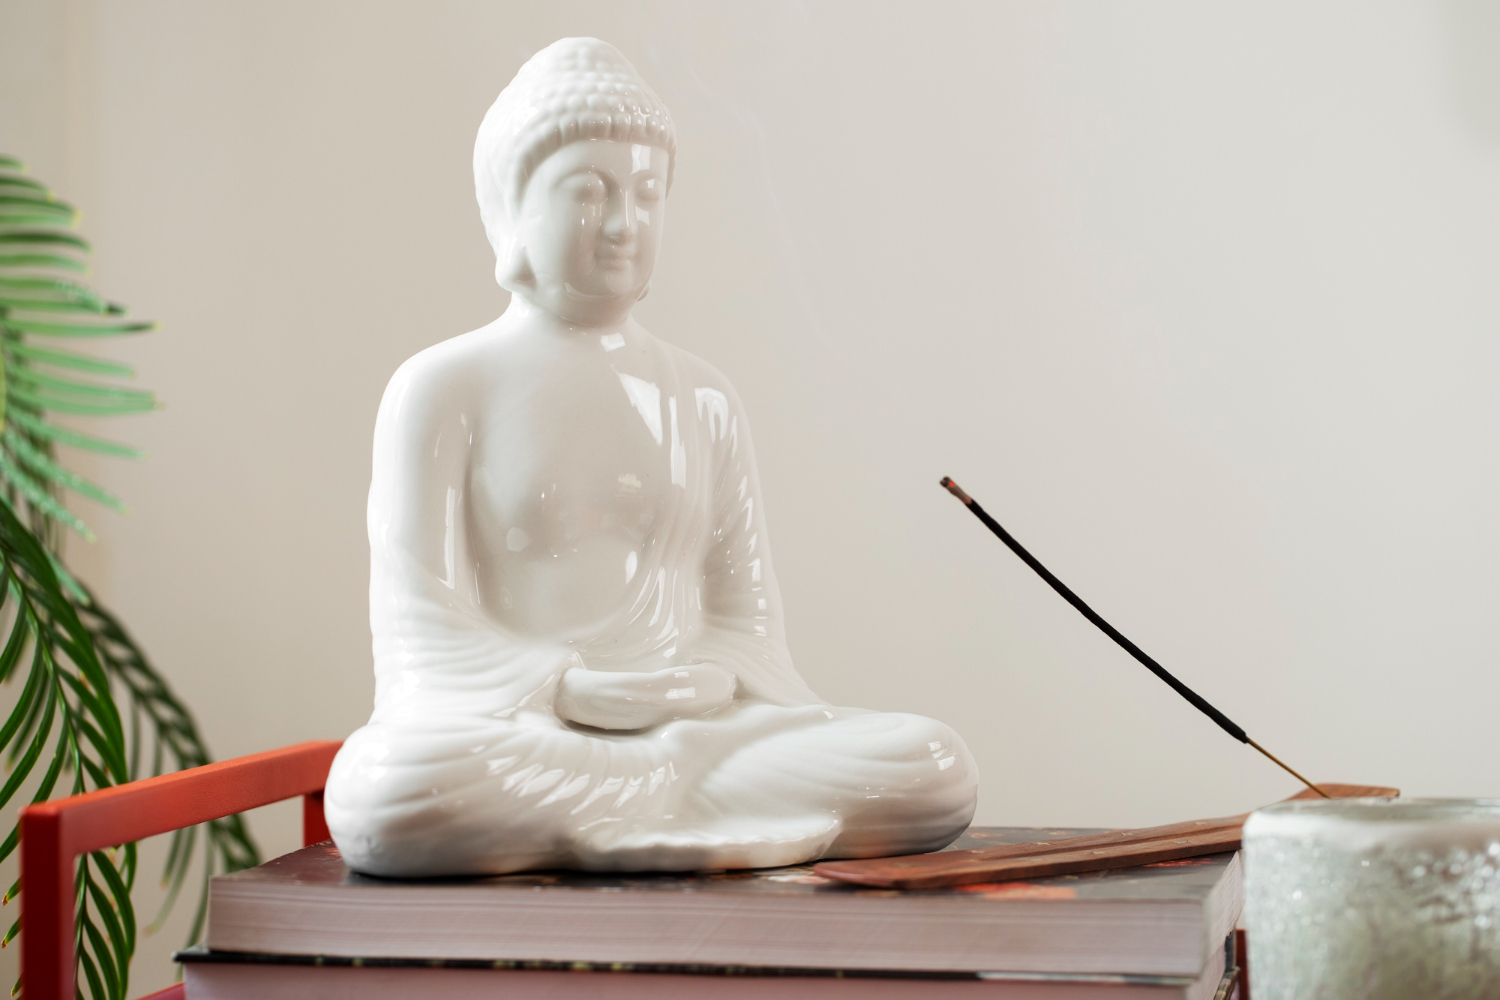 statuette representing buddha and buddhism